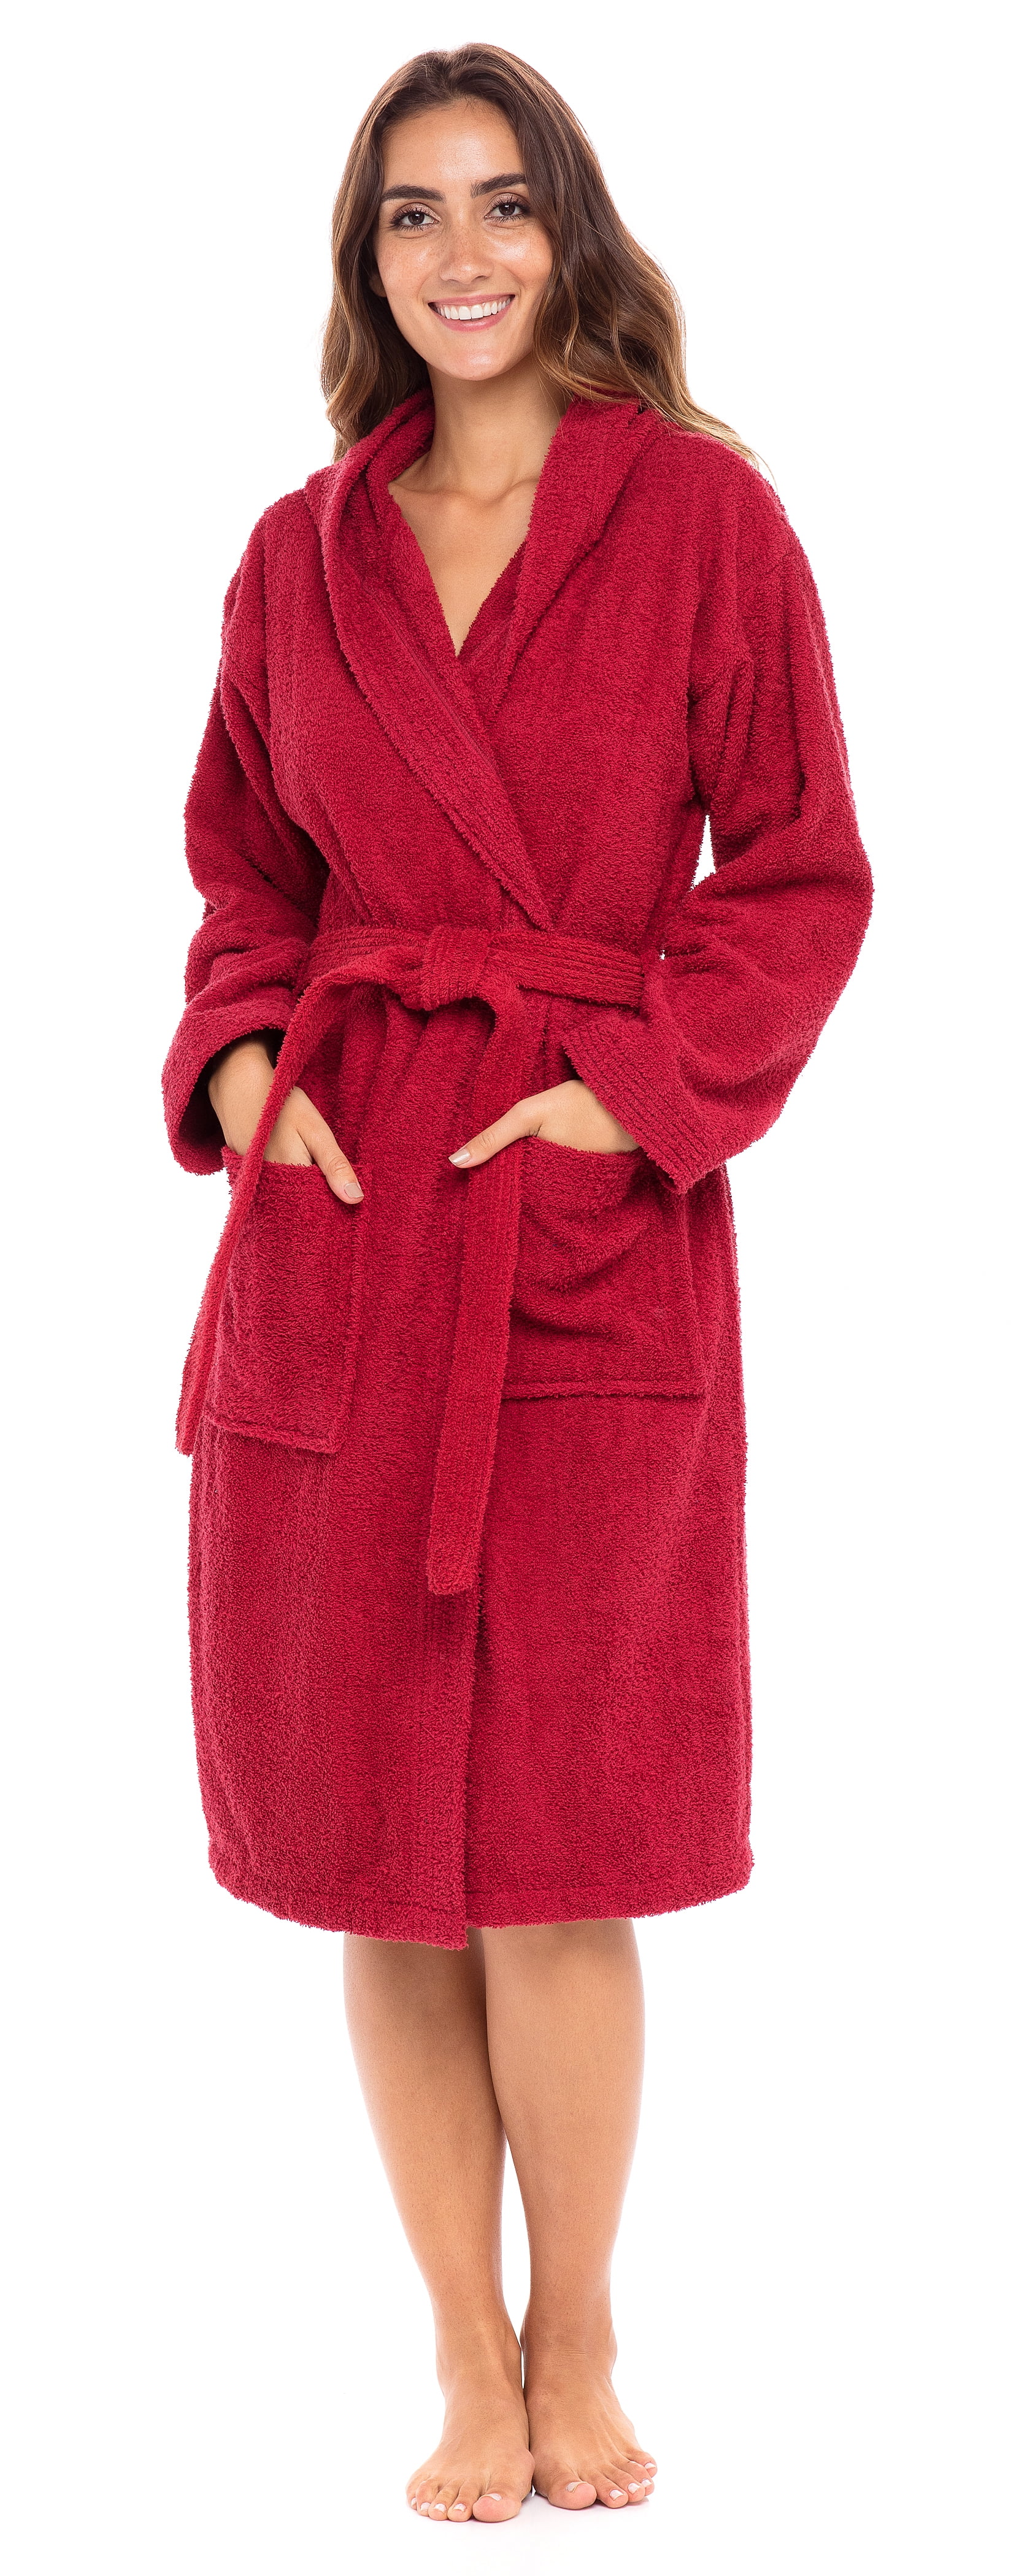 Skylinewears Women's 100% Luxury Terry Cotton Hooded Shawl Bathrobe Toweling Spa 